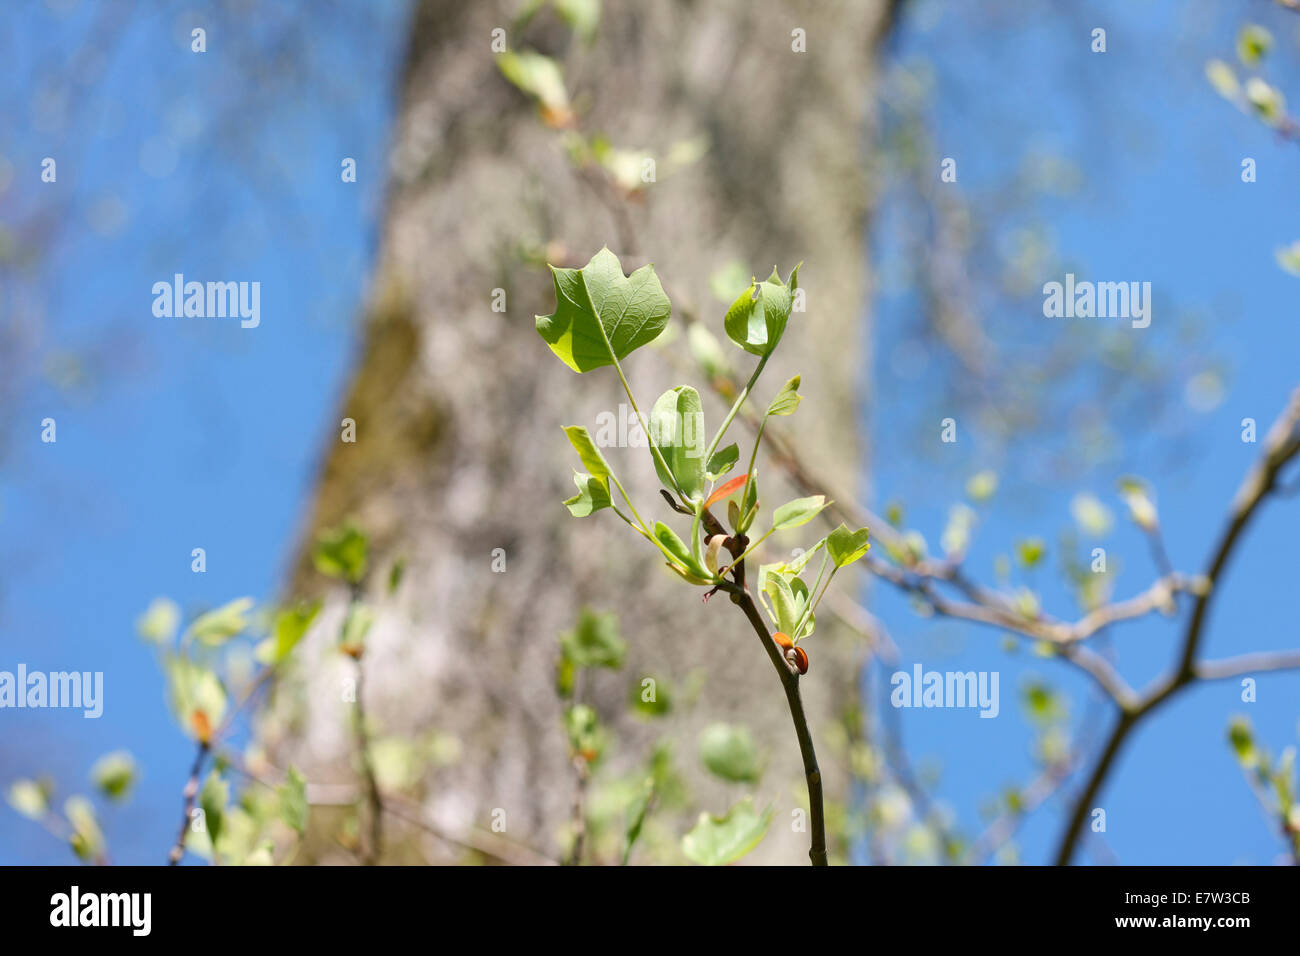 keimhaft Blätter im Frühling - neues Leben © Jane Ann Butler Fotografie JABP1307 Stockfoto